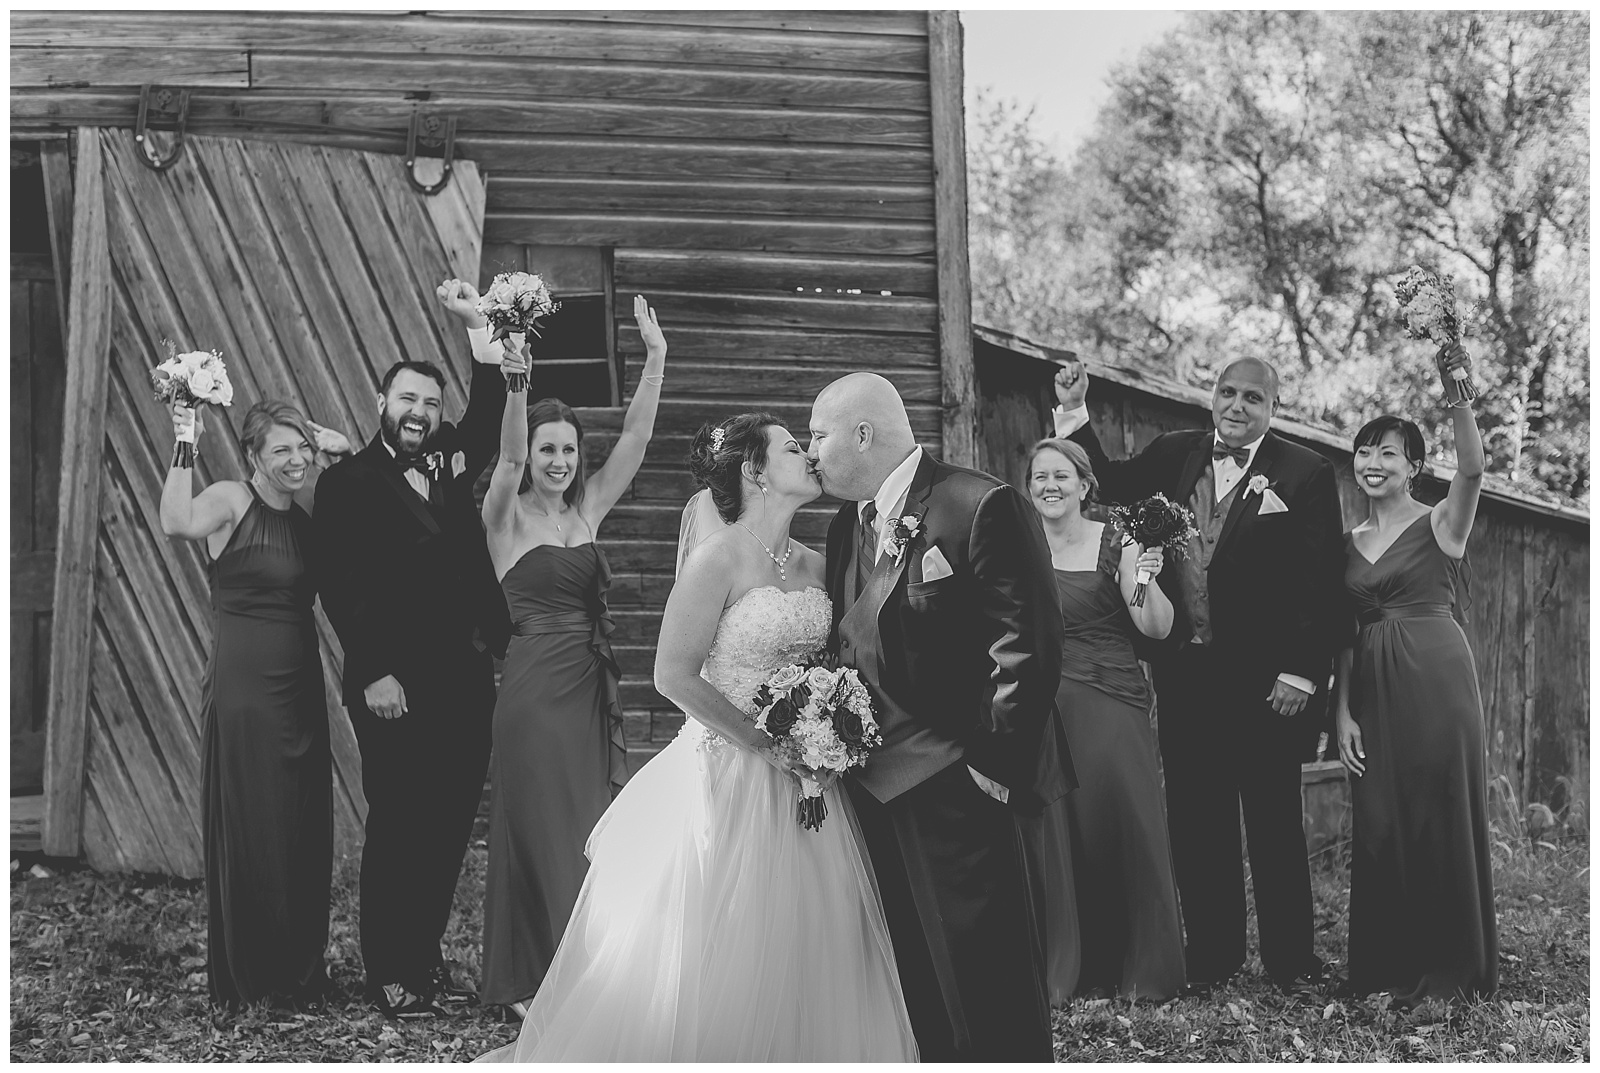 Wedding photography at Lamborn Farm in Leavenworth, Kansas.